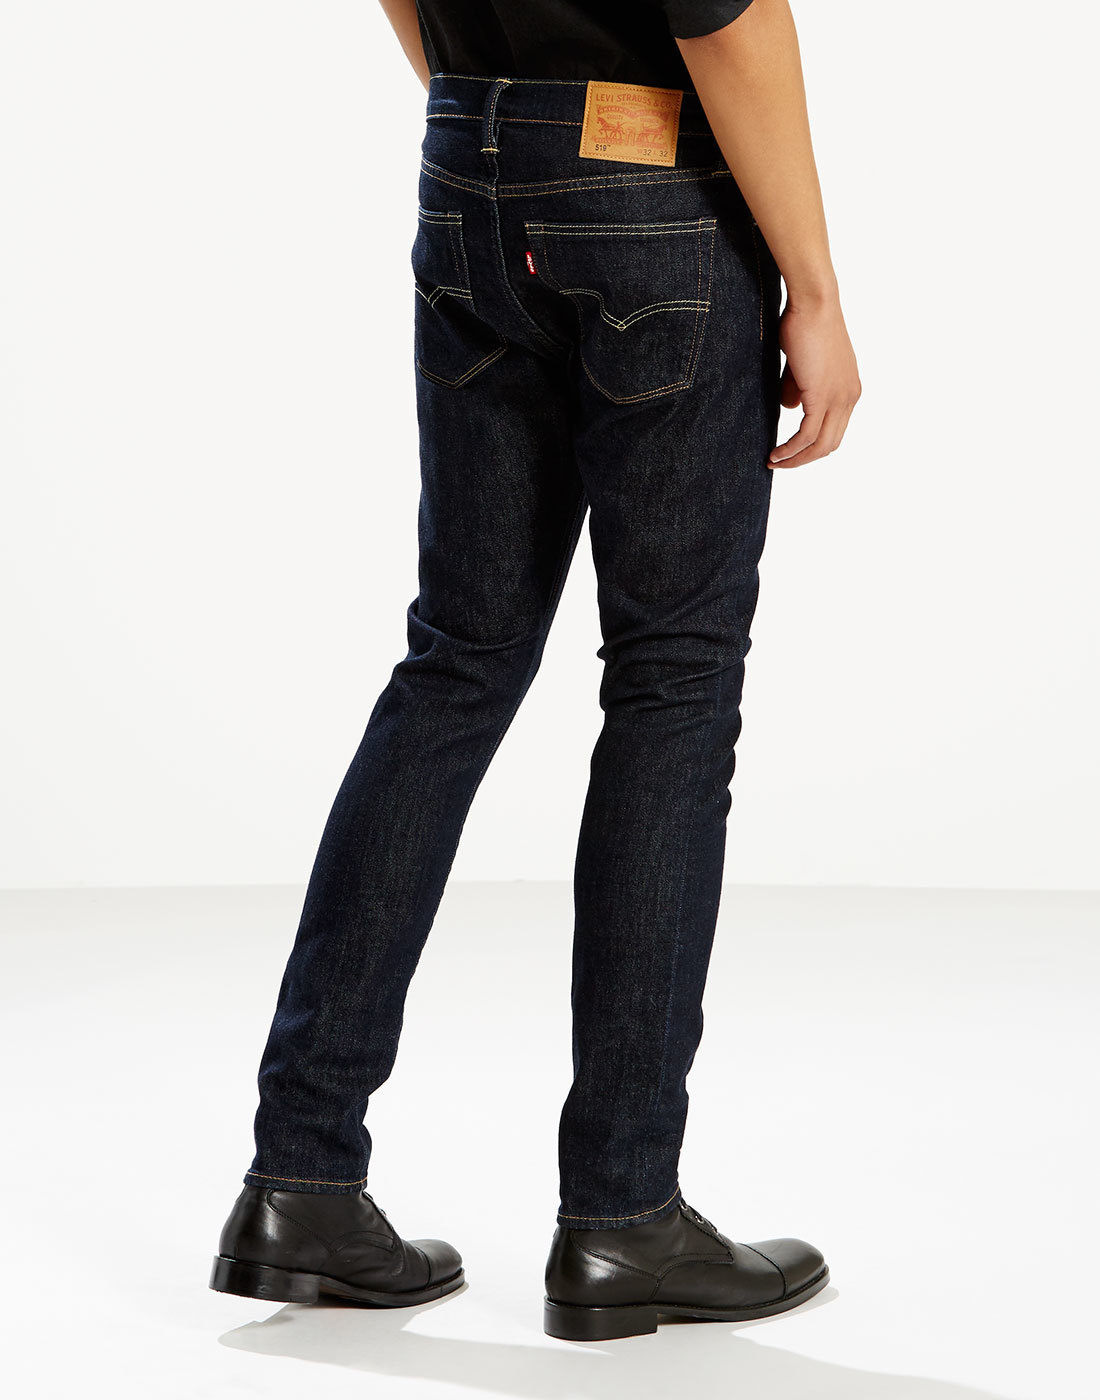 LEVI'S® 519 Retro Indie Mod Extreme Skinny Denim Jeans in Pipe